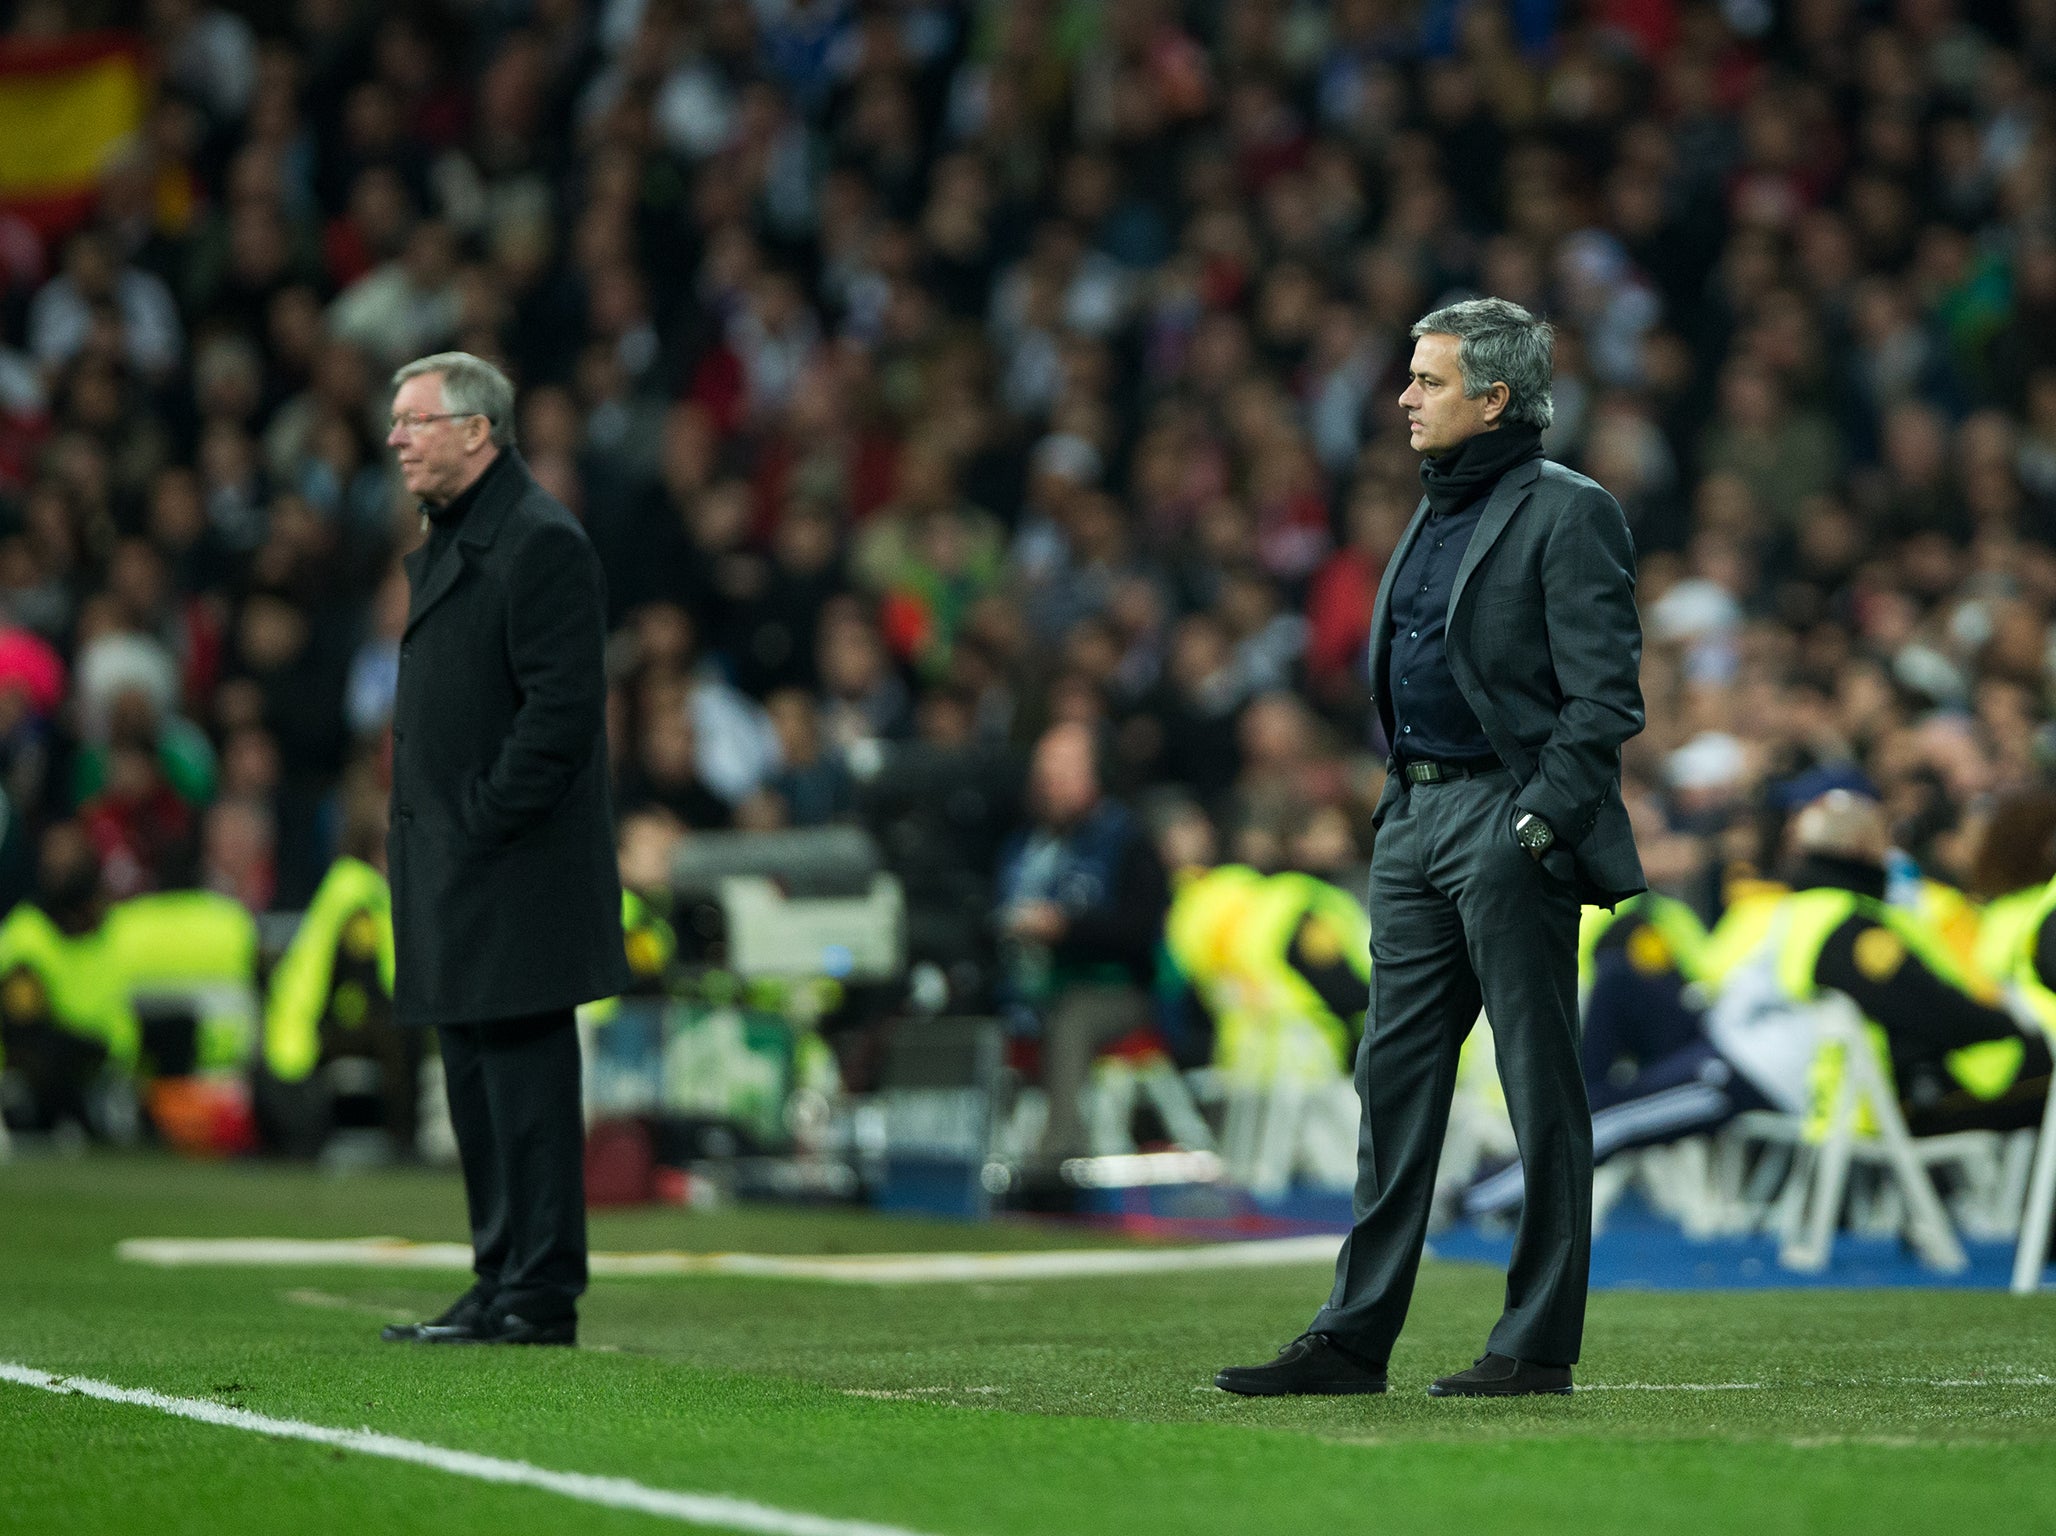 Jose Mourinho will take a leaf out of Sir Alex Ferguson's book